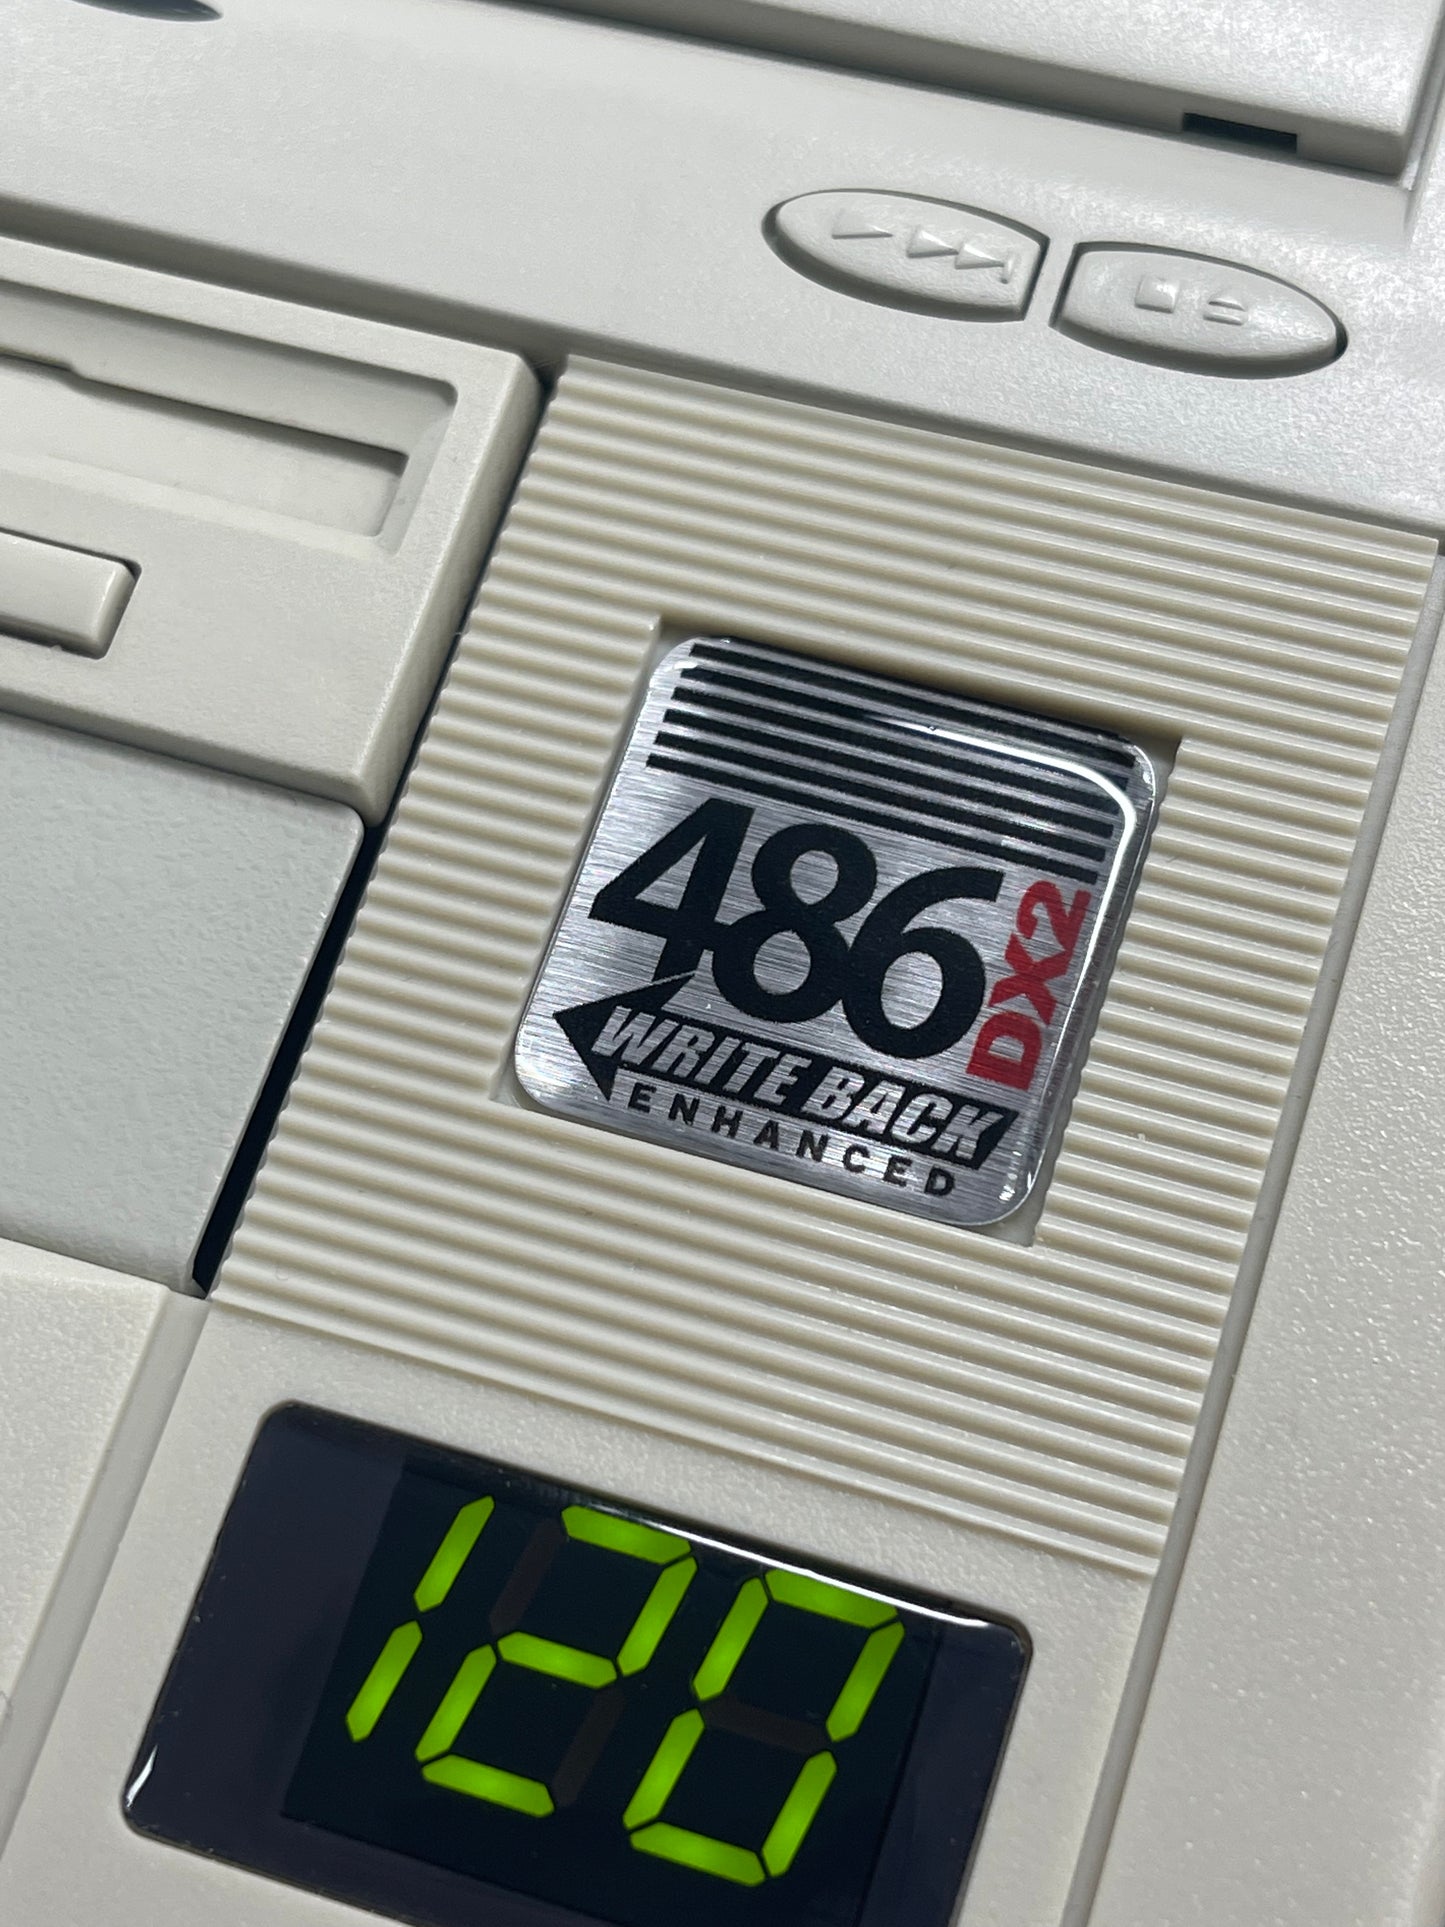 486 DX2 "Write-Back Enhanced" Case Badge Sticker DOMED